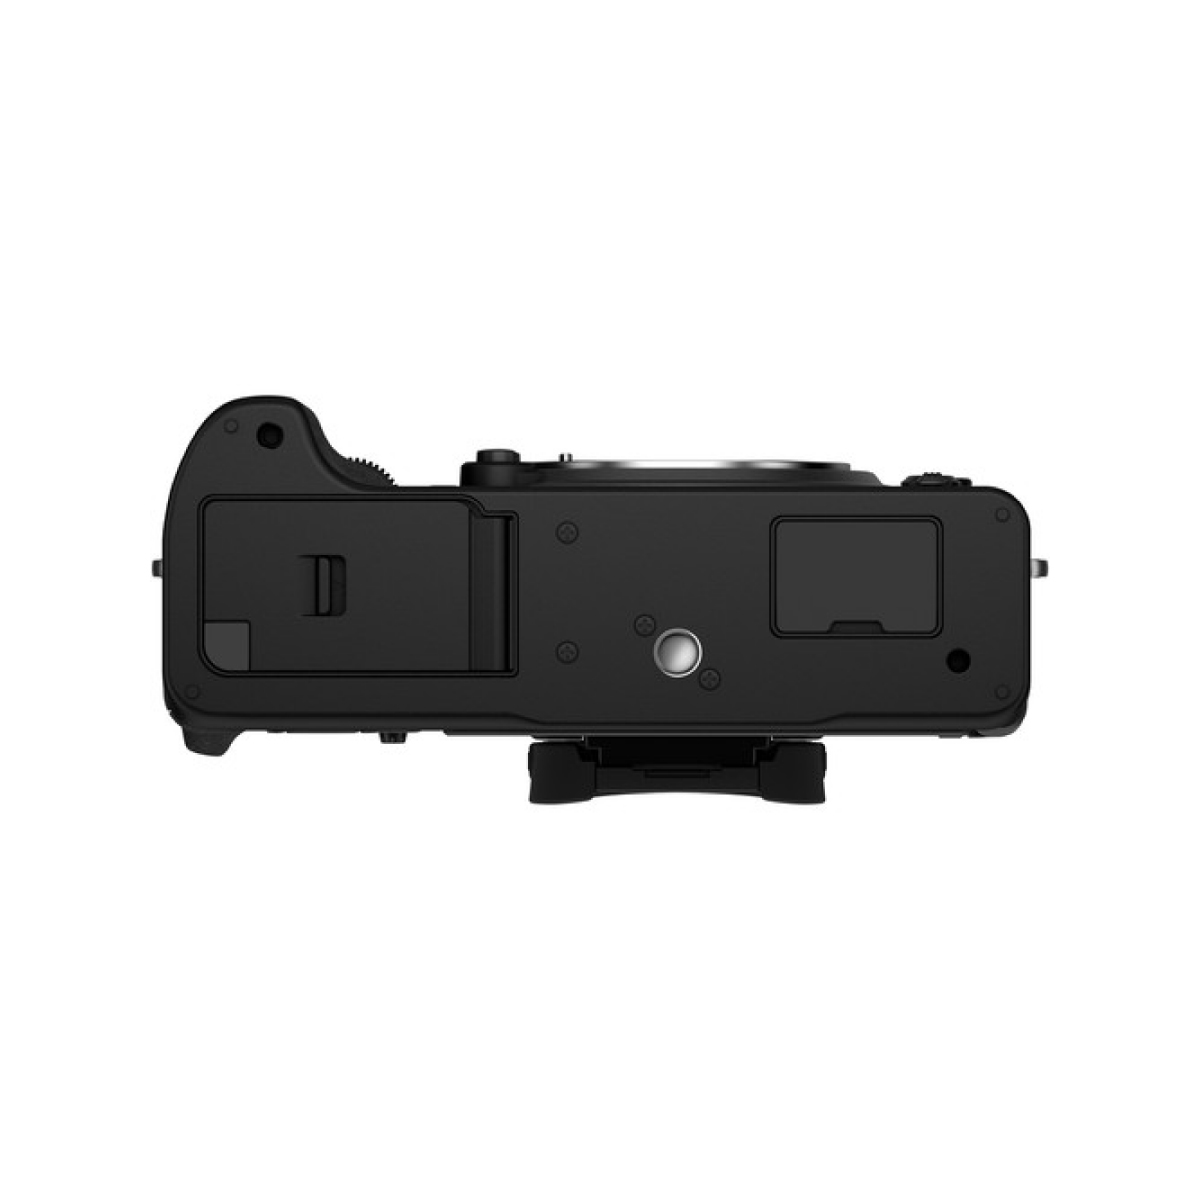 Fujifilm X-T4 26 MP Mirrorless Camera Body with XF16-80mm Lens – Black (5)